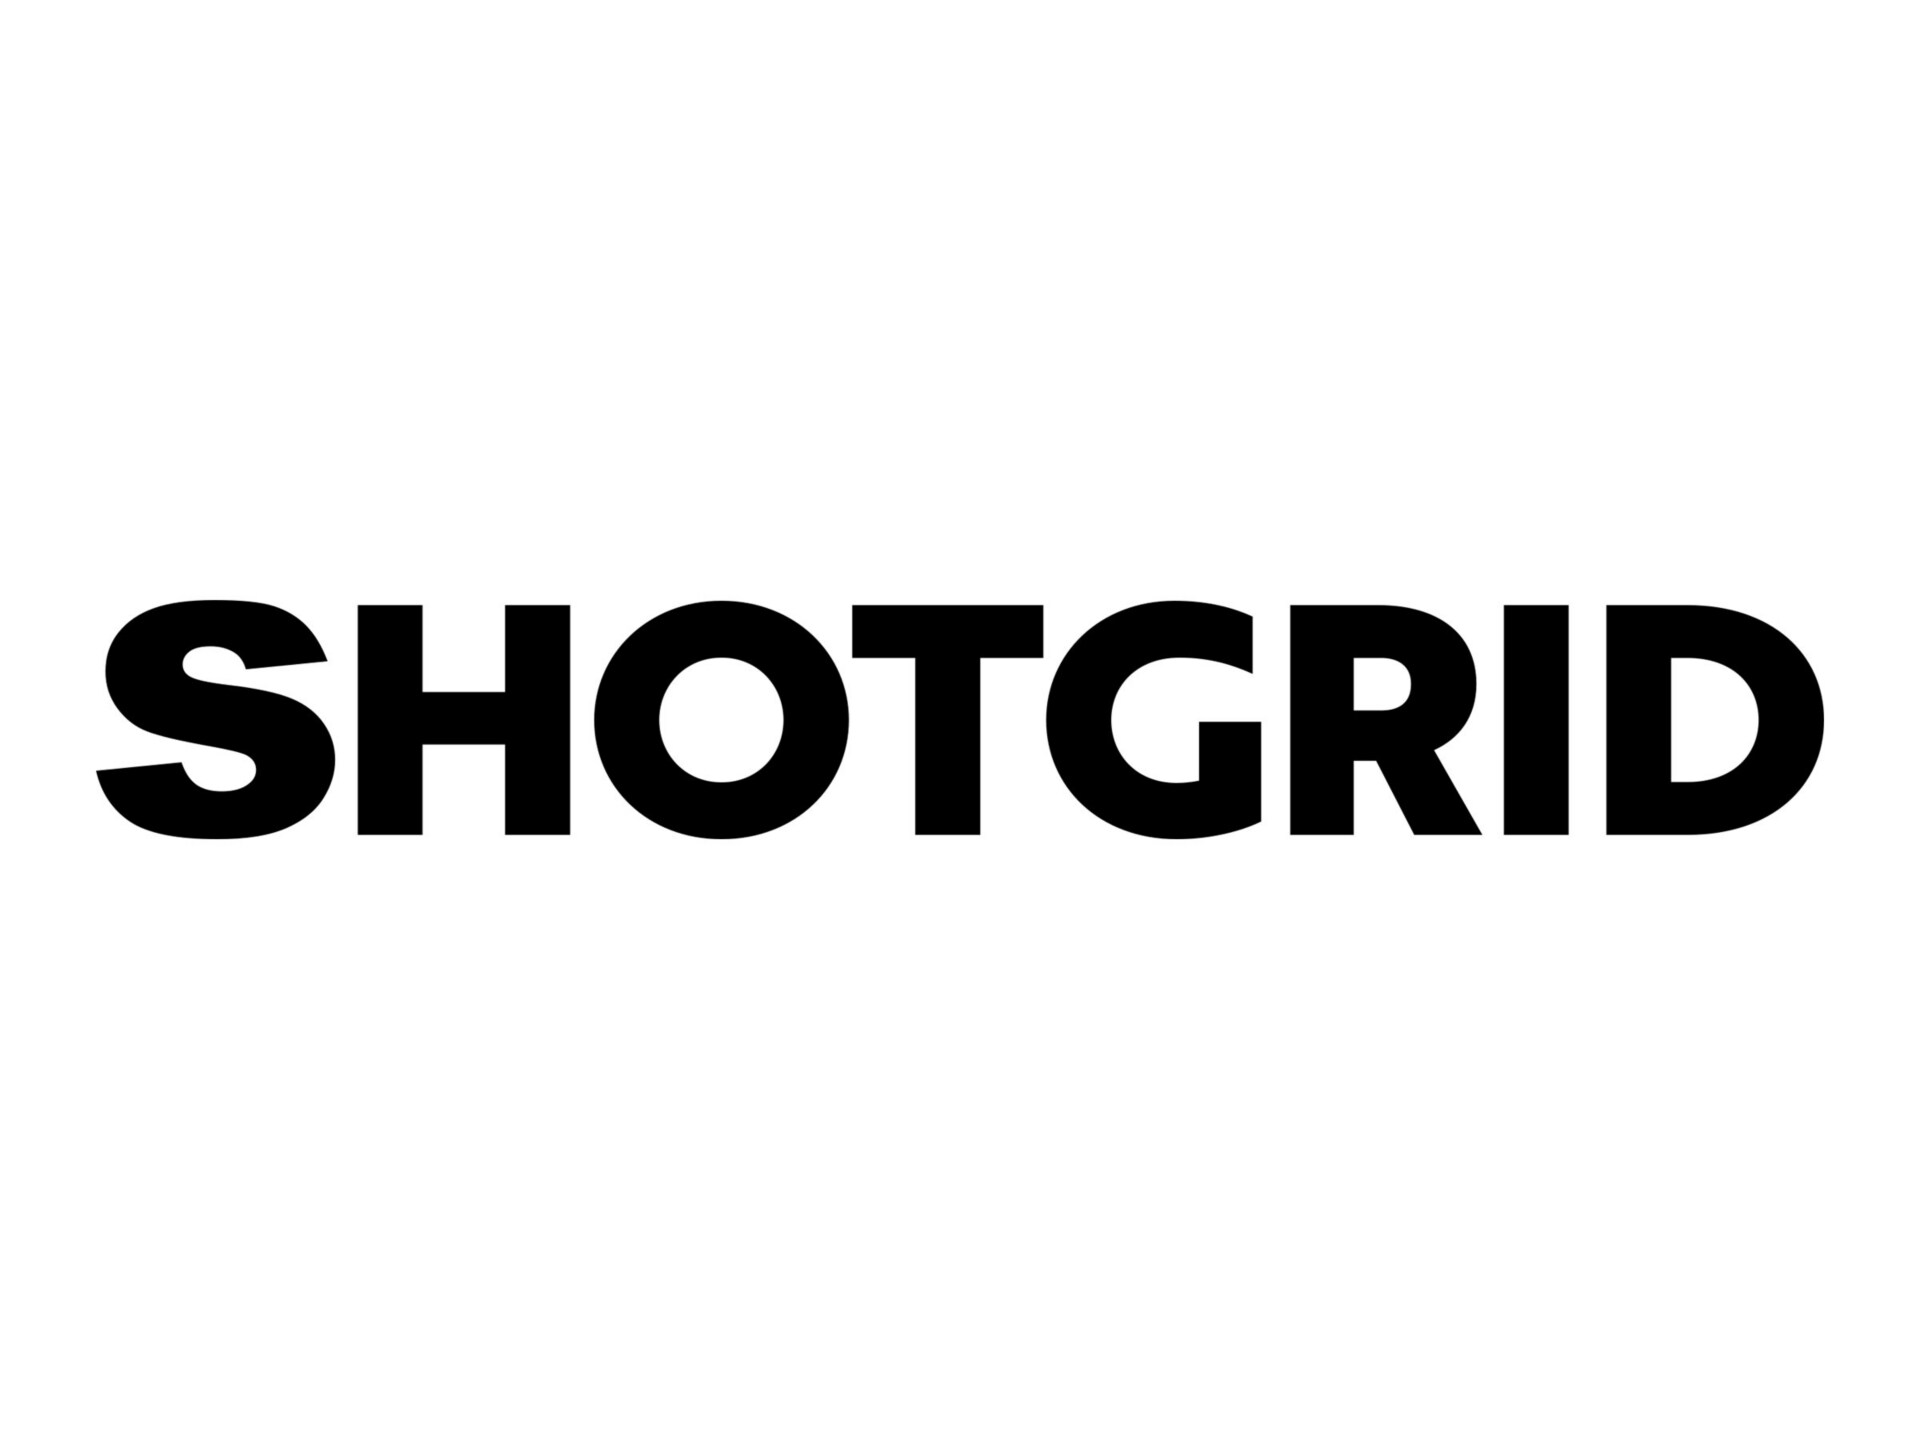 Autodesk ShotGrid - New Subscription (11 months) - 1 seat